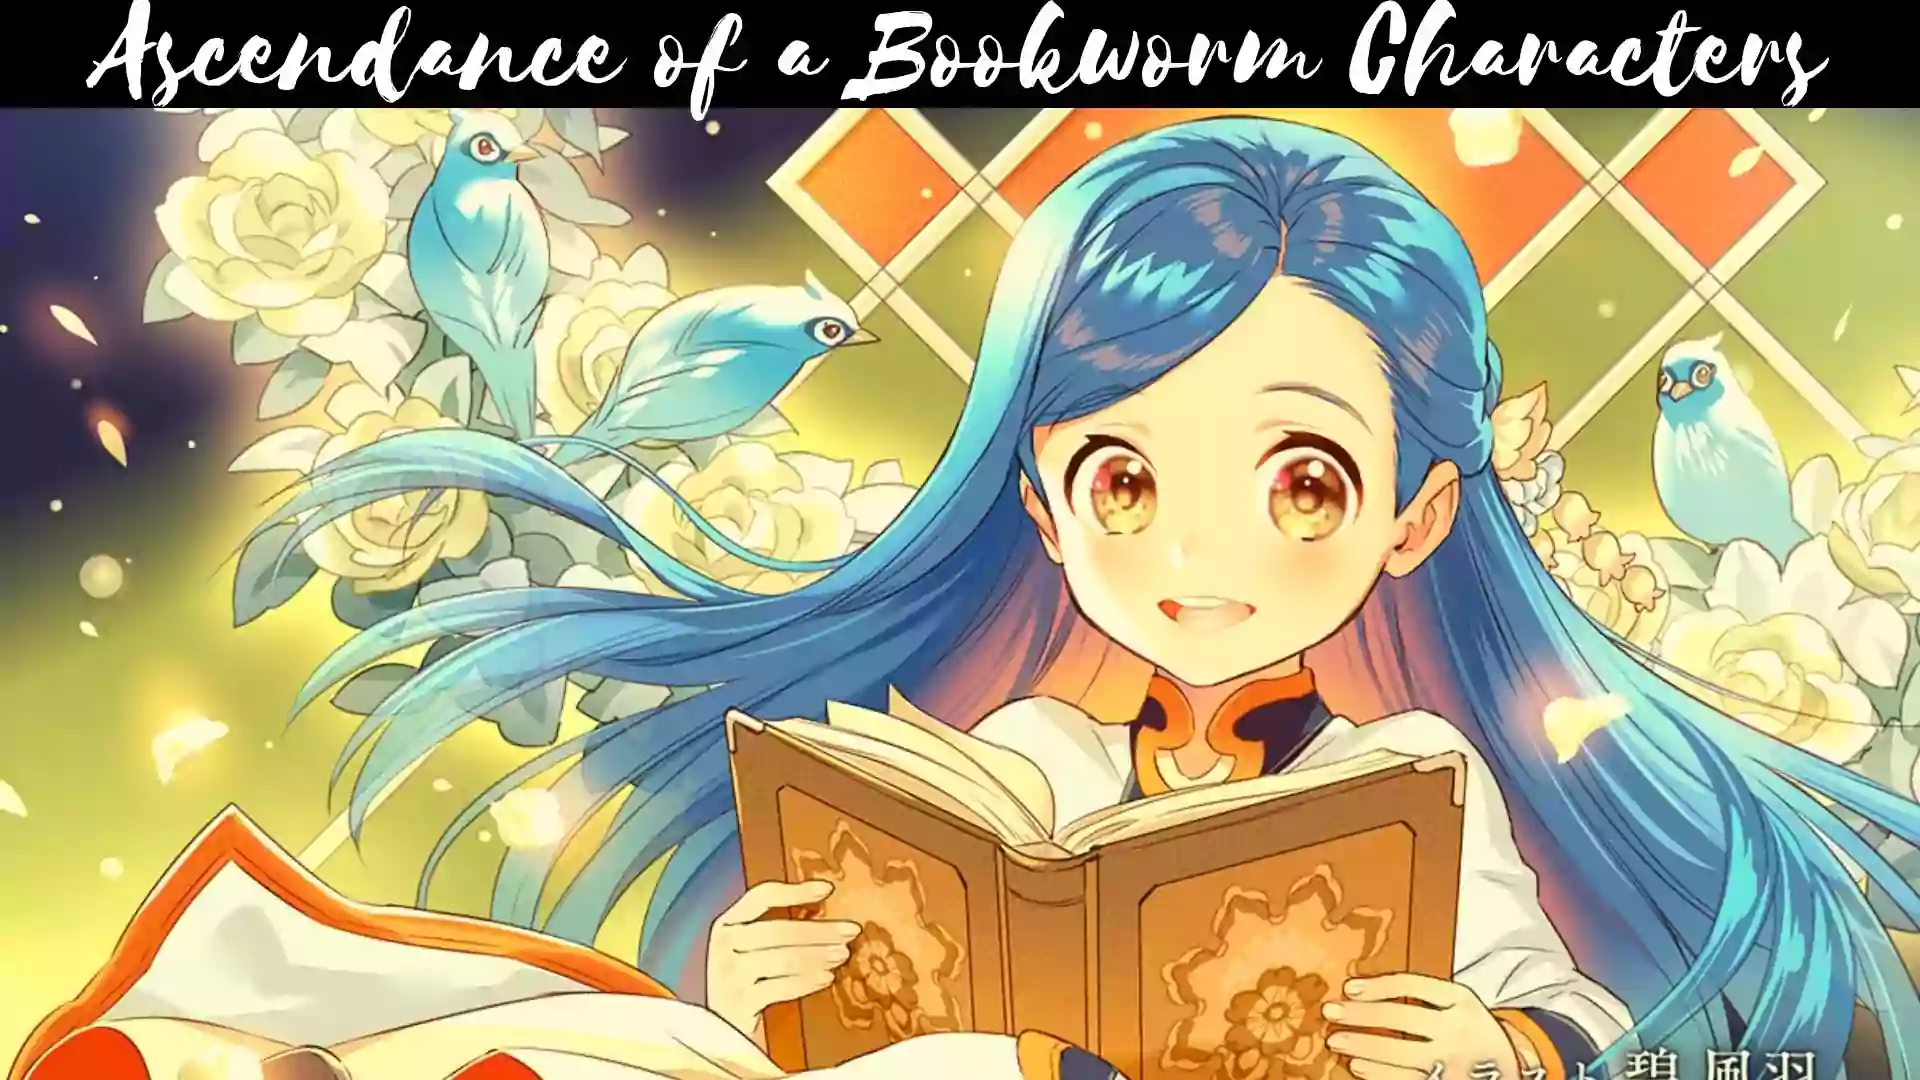 Ascendance of a Bookworm Characters | 2013 Light Novel